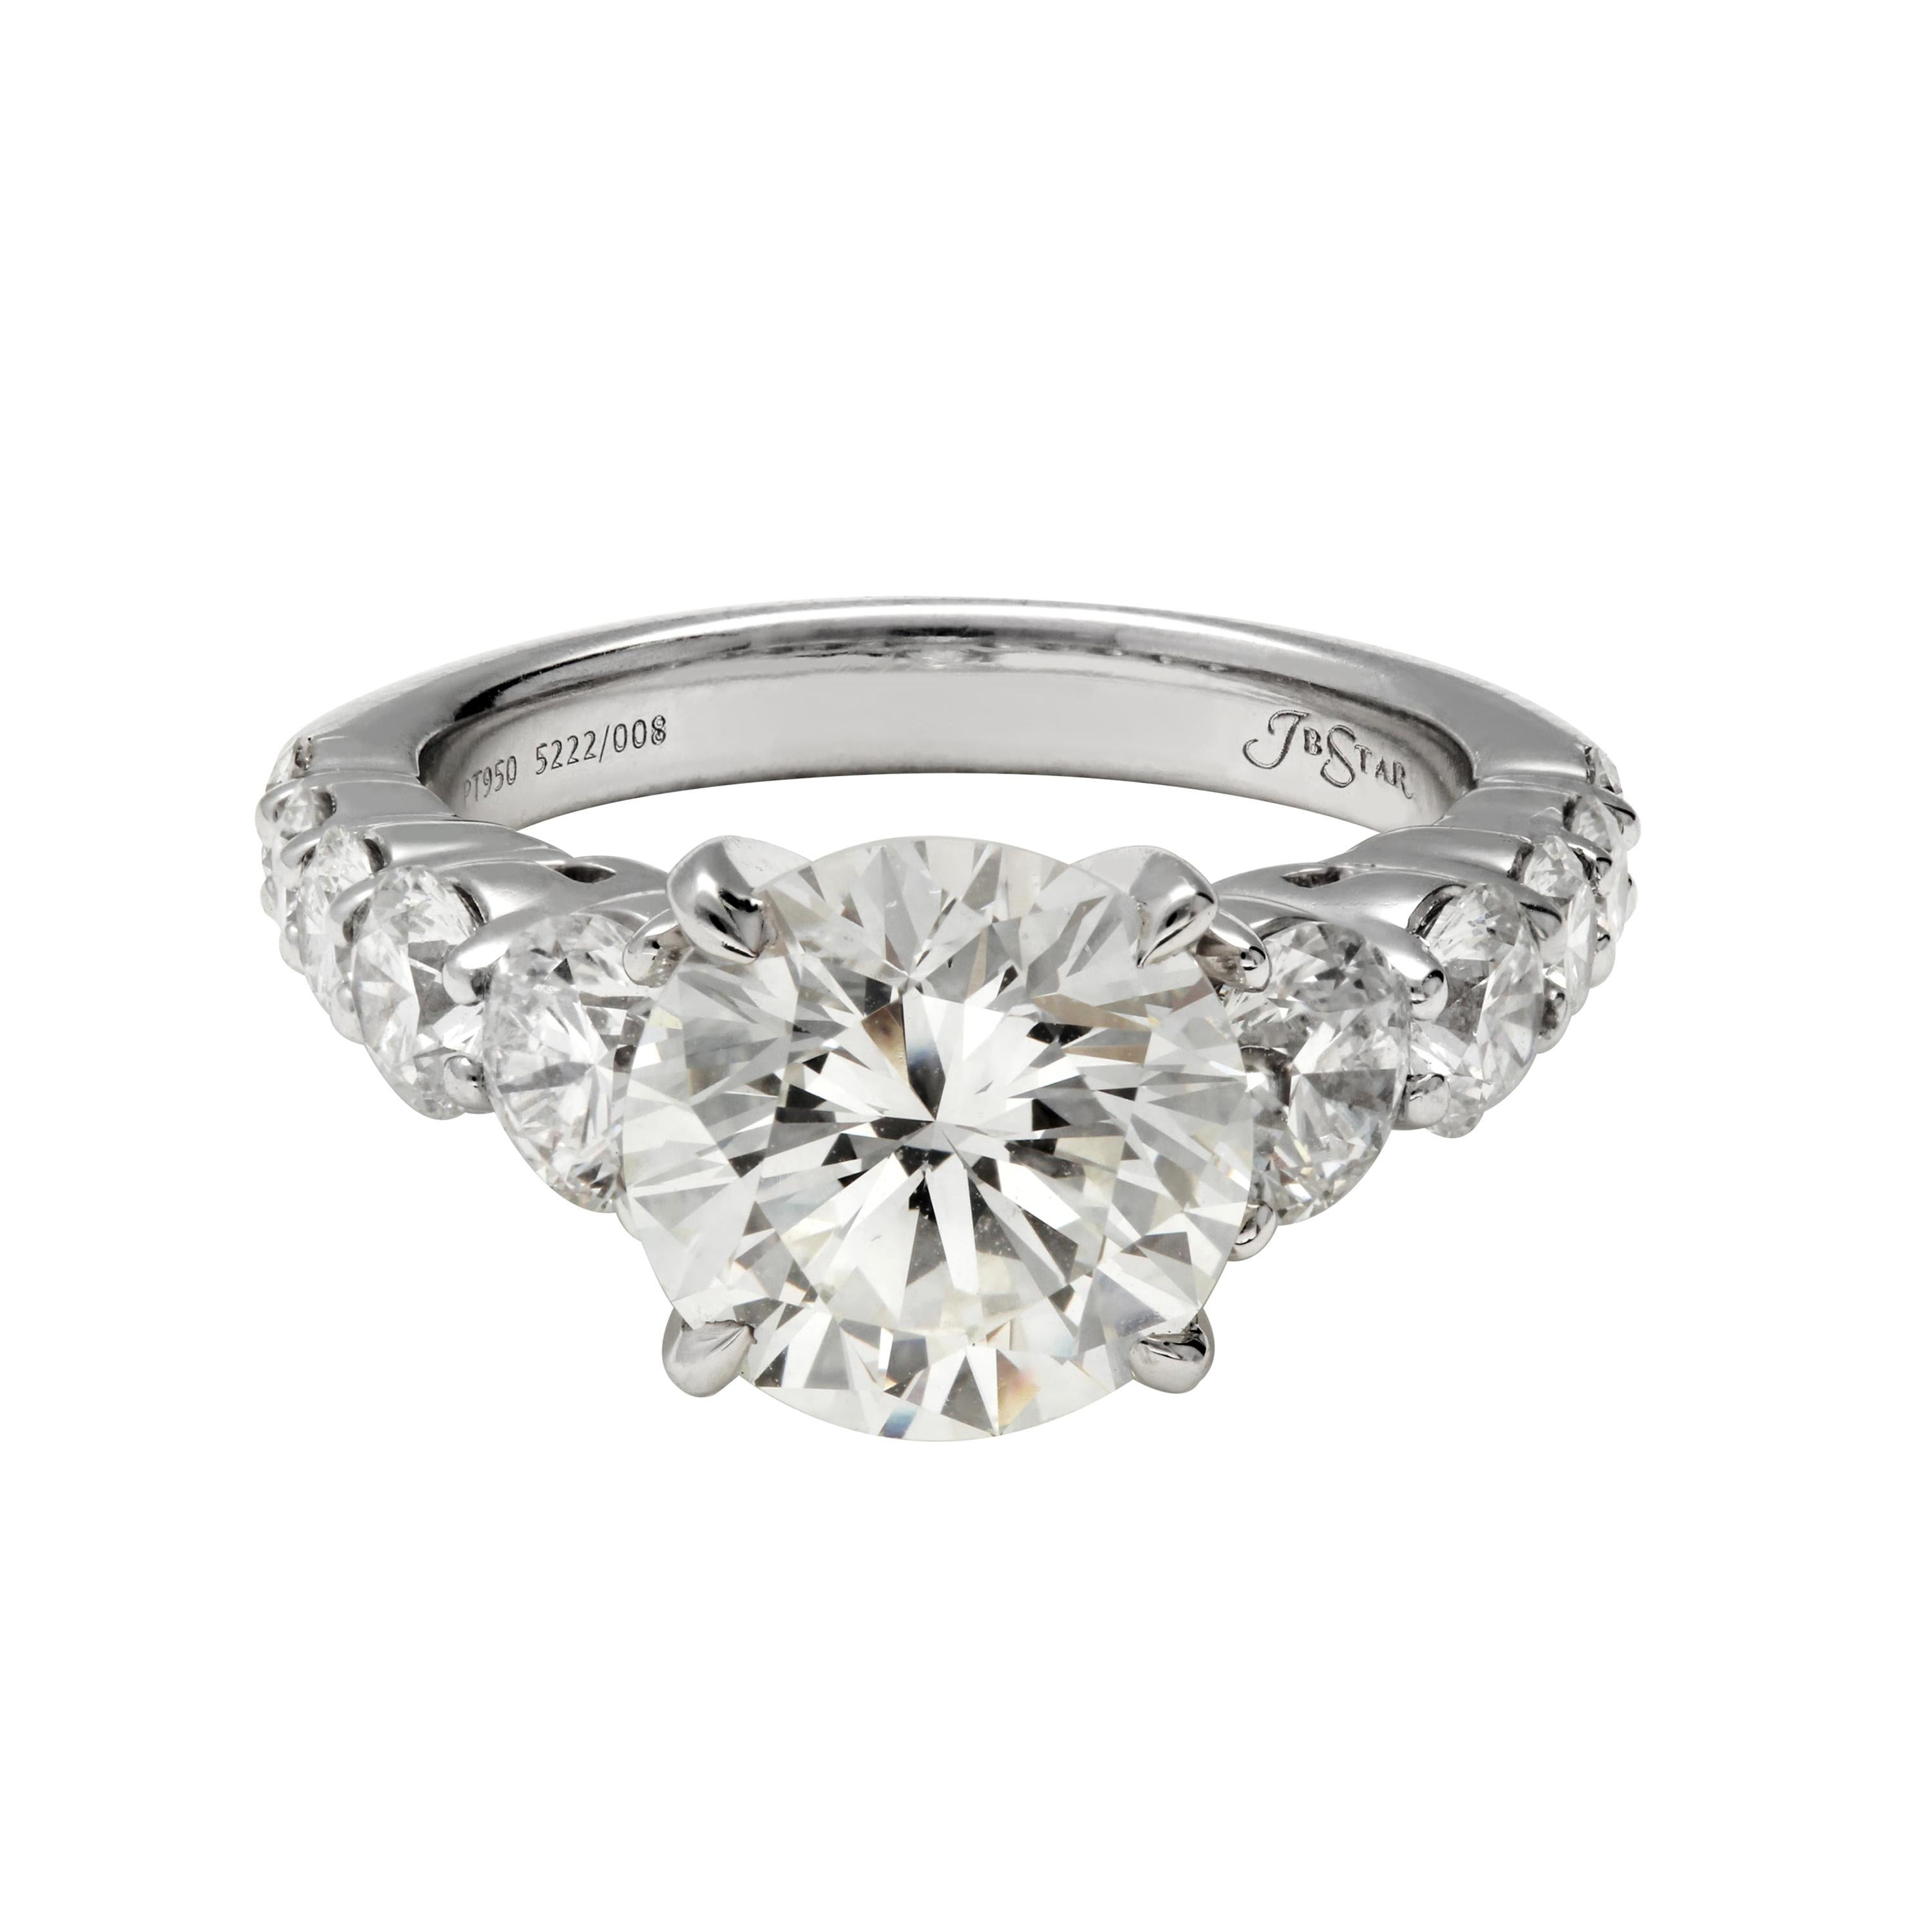 JB Star Platinum Graduated Diamond Engagement Ring with 3.20ct Diamond Center For Sale